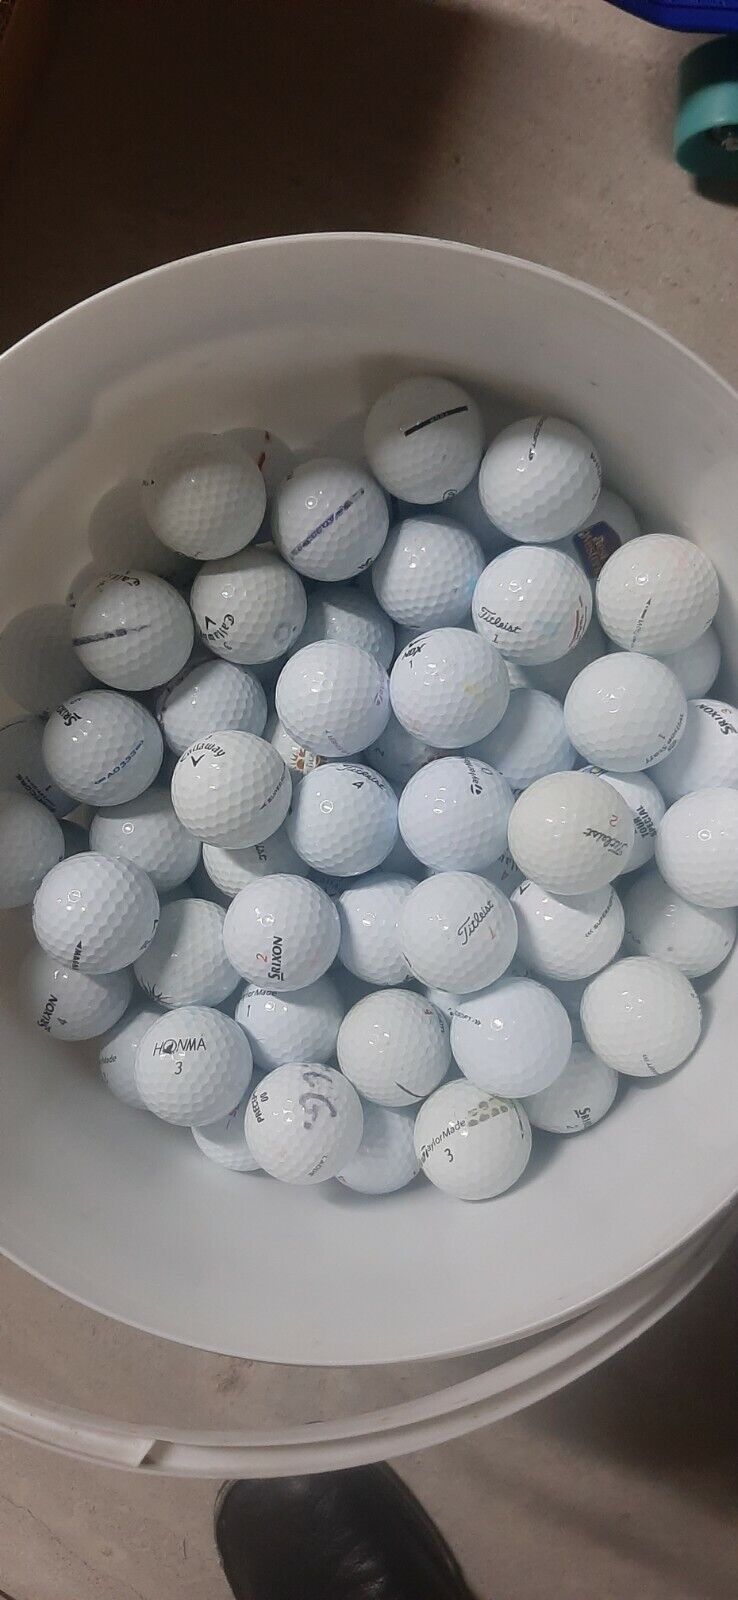 150 Balles De Golf Supérieure Pour 50 Euros (Taylormade, Titeleist, Callaway...